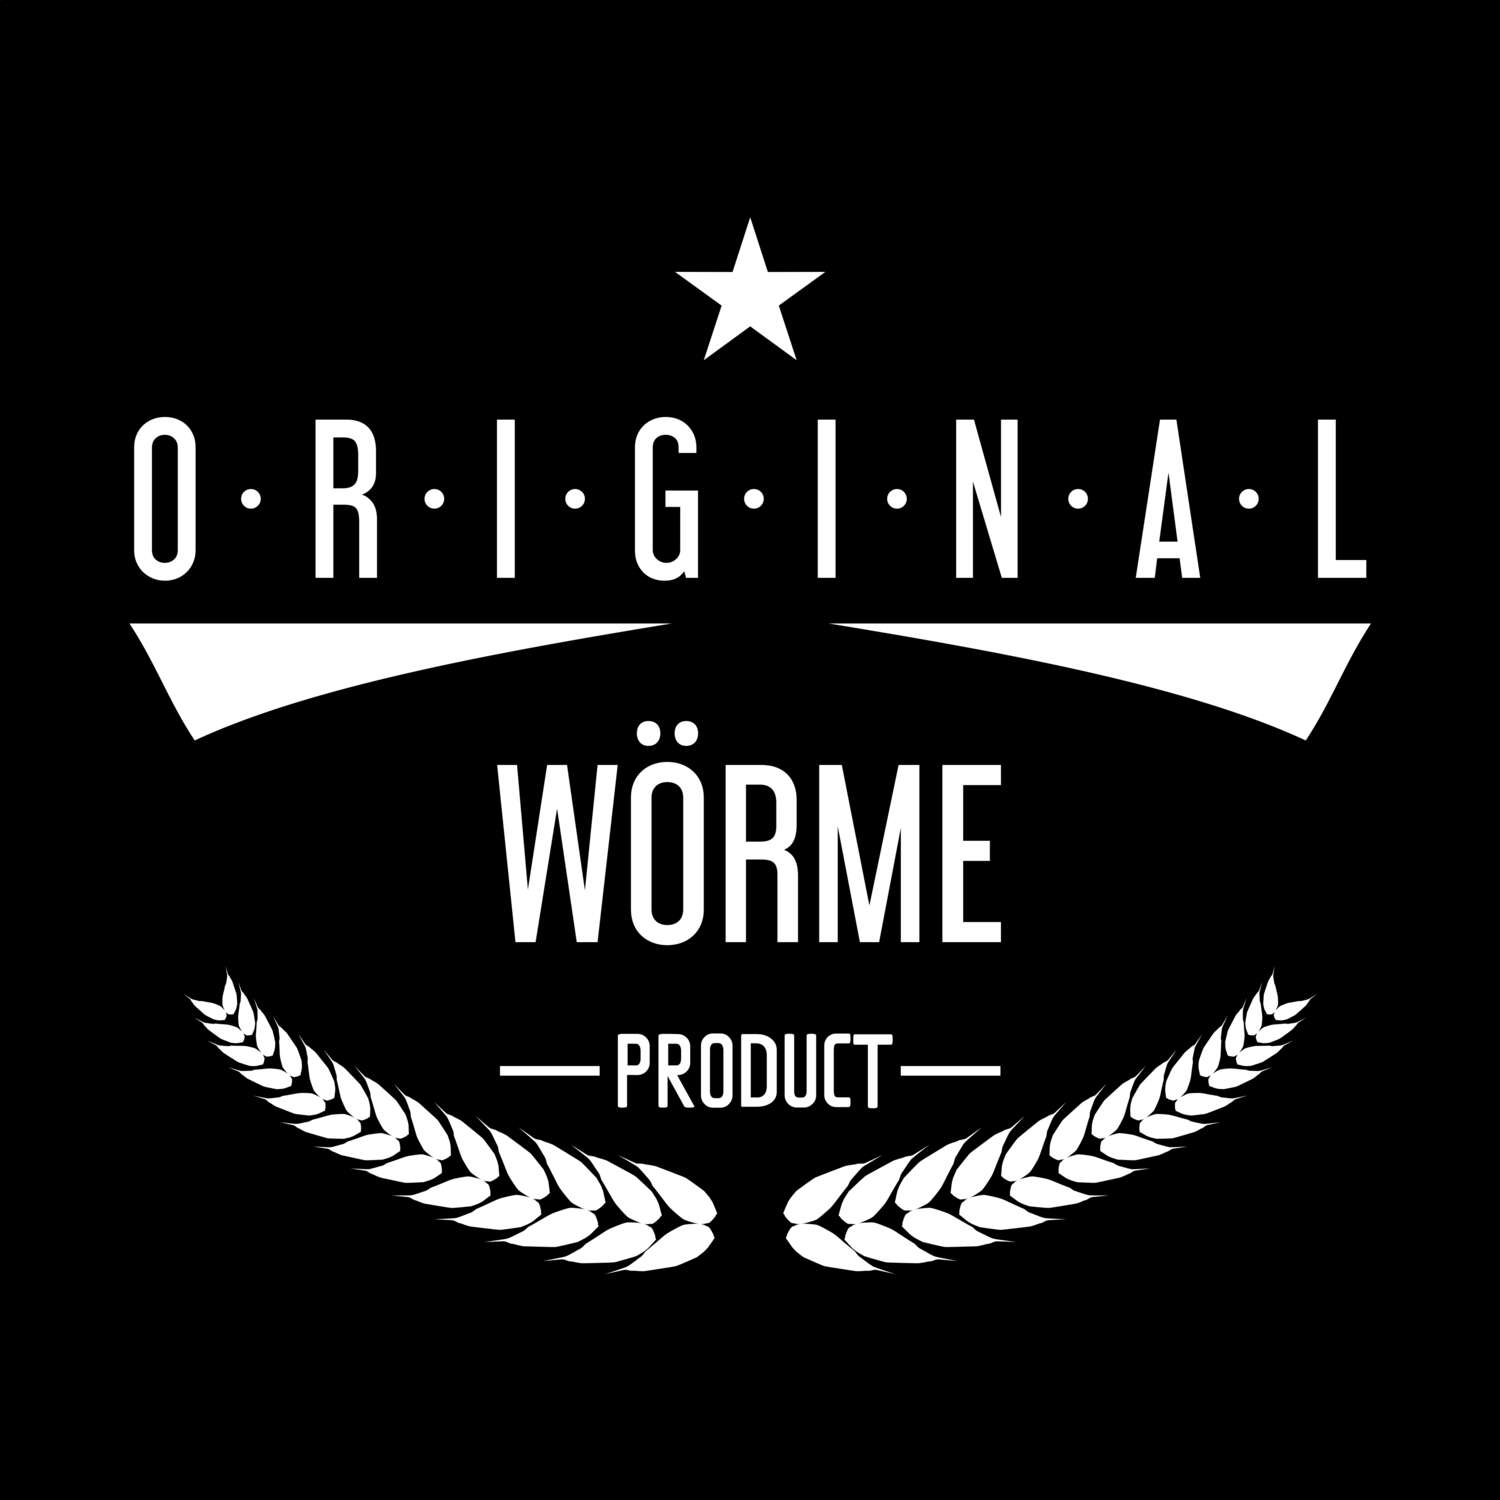 Wörme T-Shirt »Original Product«